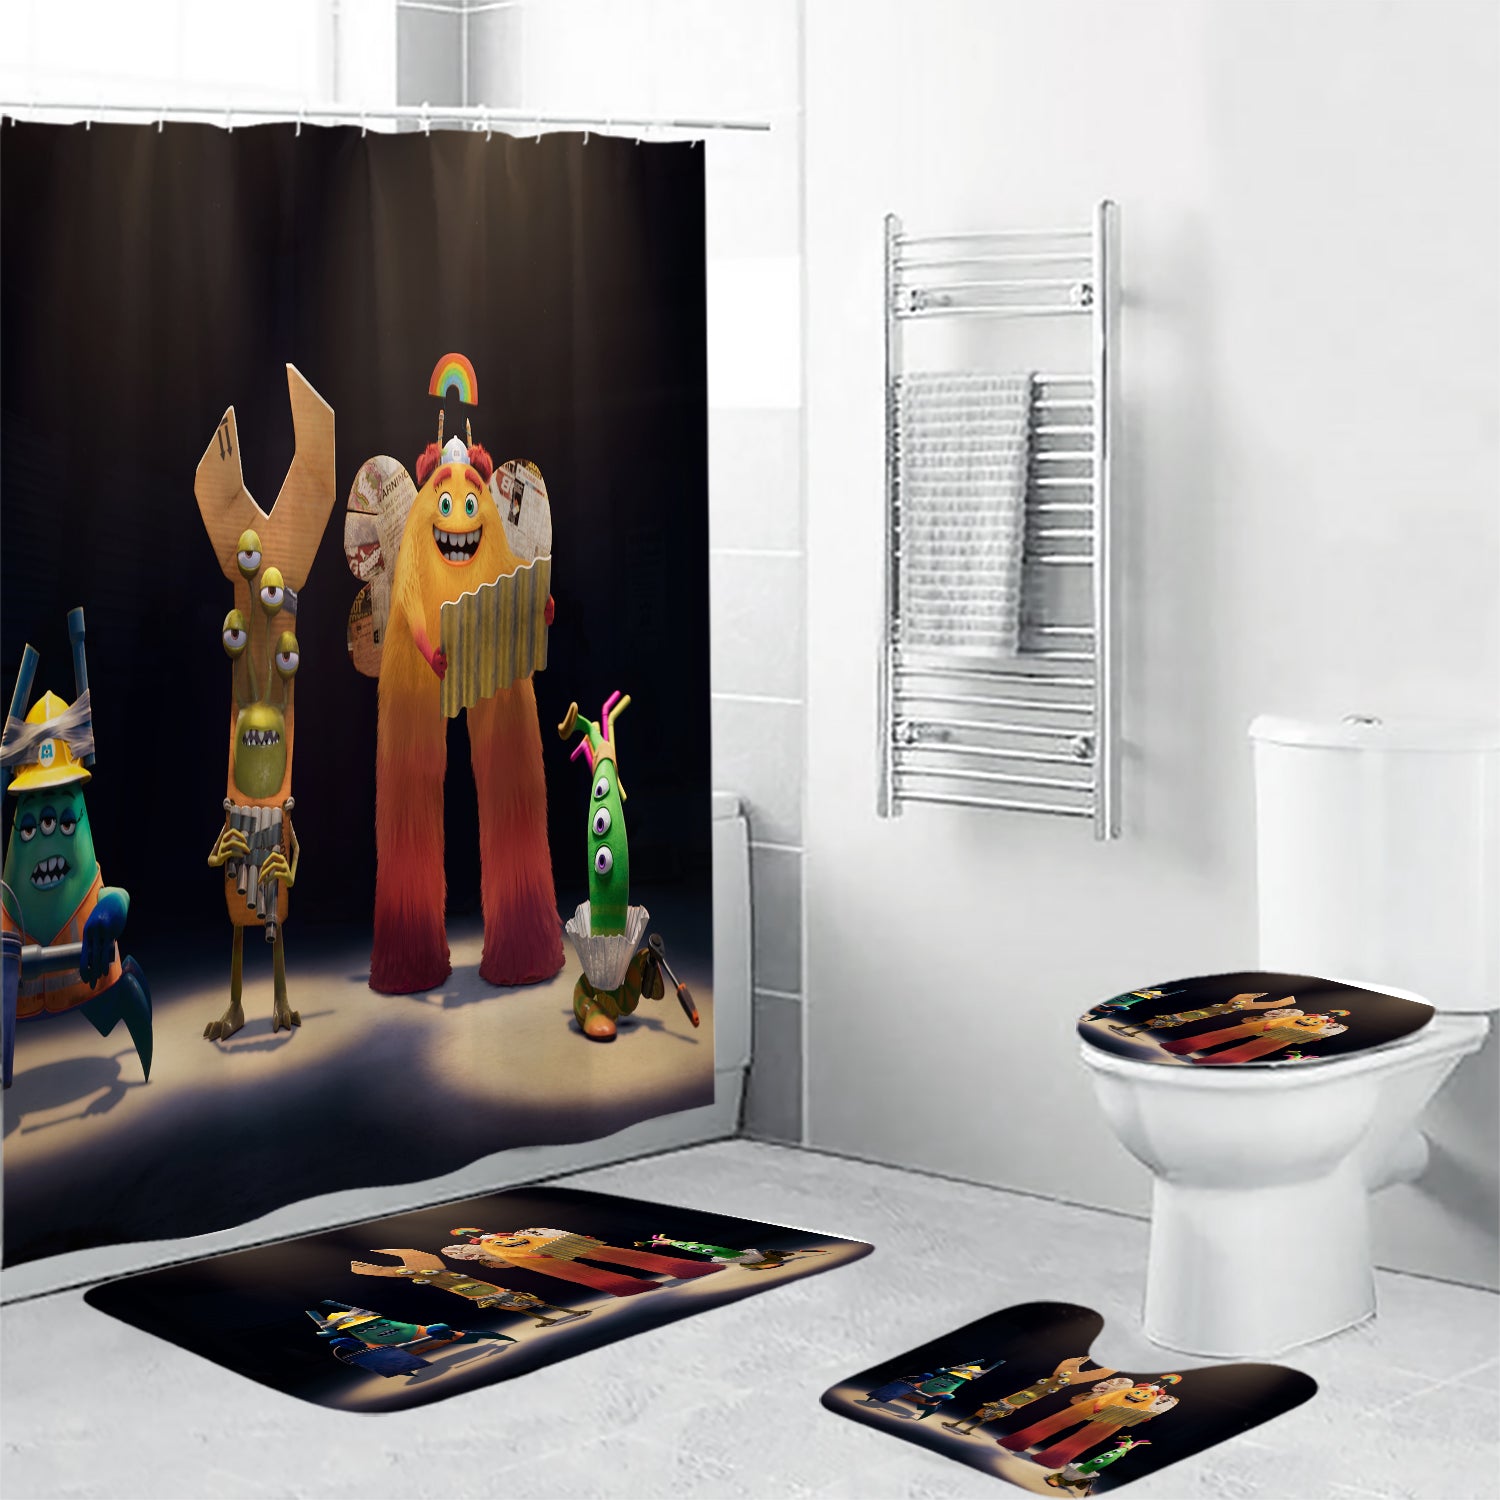 Characters Monster At Work v3 Monsters Inc Monsters University Movie Disney Pixar Waterproof Shower Curtain Non-Slip Toilet Lid Cover Bath Mat - Bathroom Set